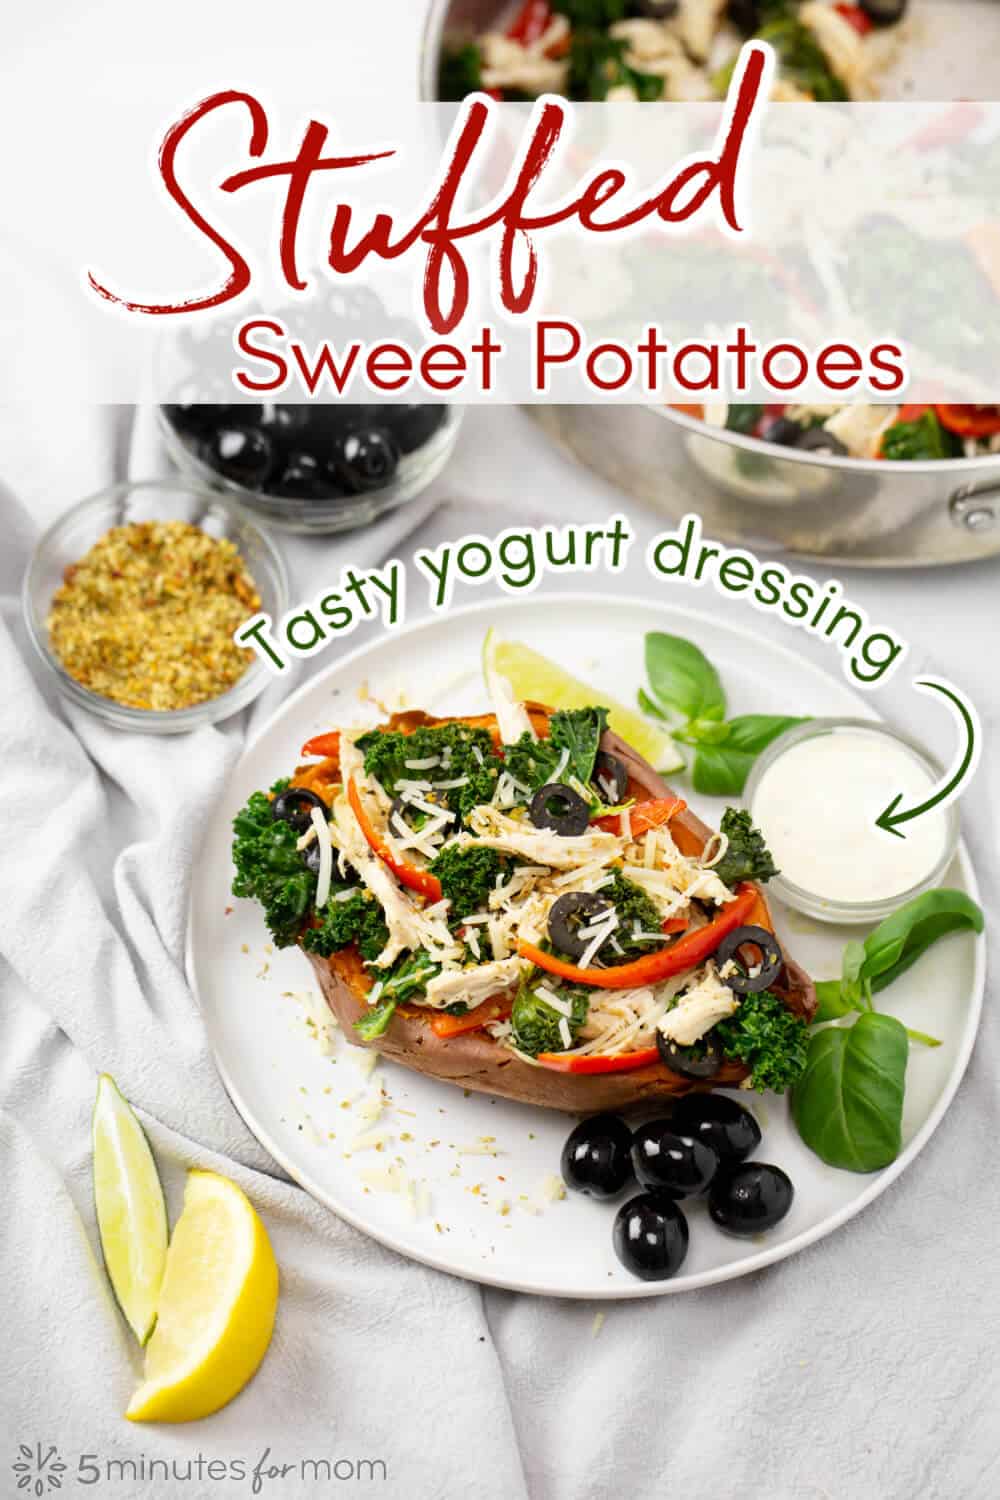 Stuffed Sweet Potatoes with Tasty Yogurt Dressing Recipe